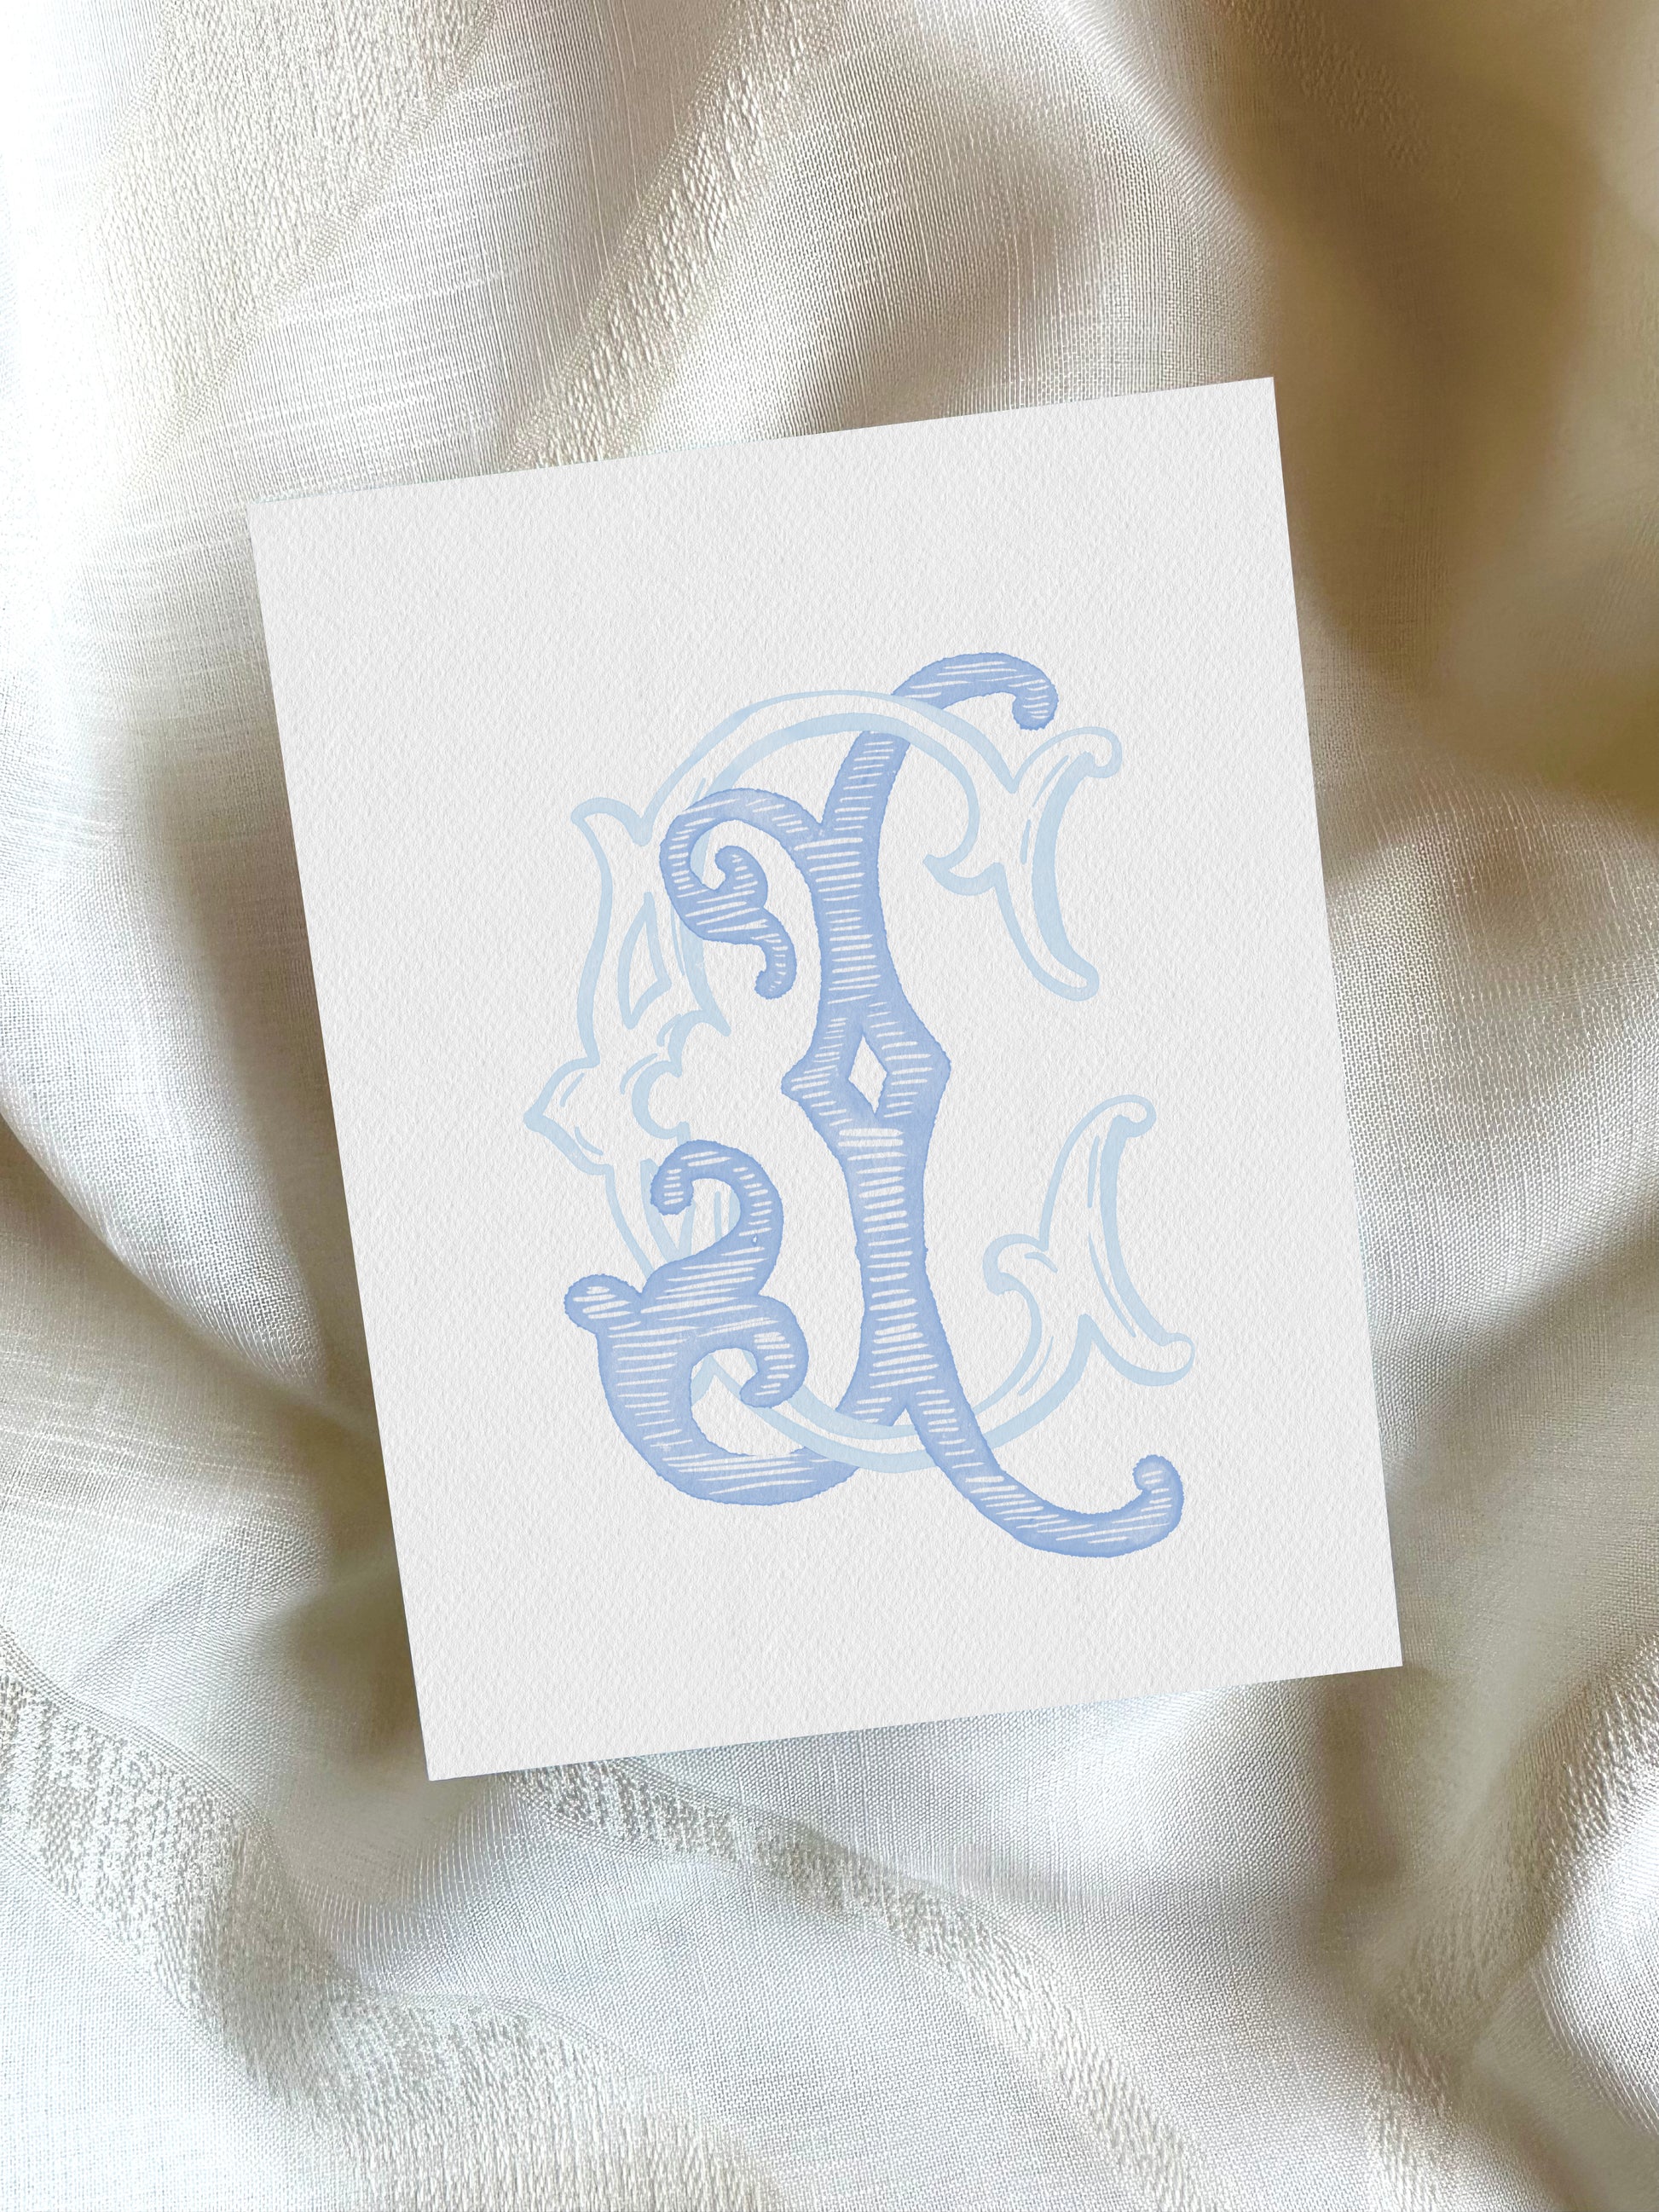 2 Letter Monogram with Letters CJ JC | Digital Download - Wedding Monogram SVG, Personal Logo, Wedding Logo for Wedding Invitations The Wedding Crest Lab